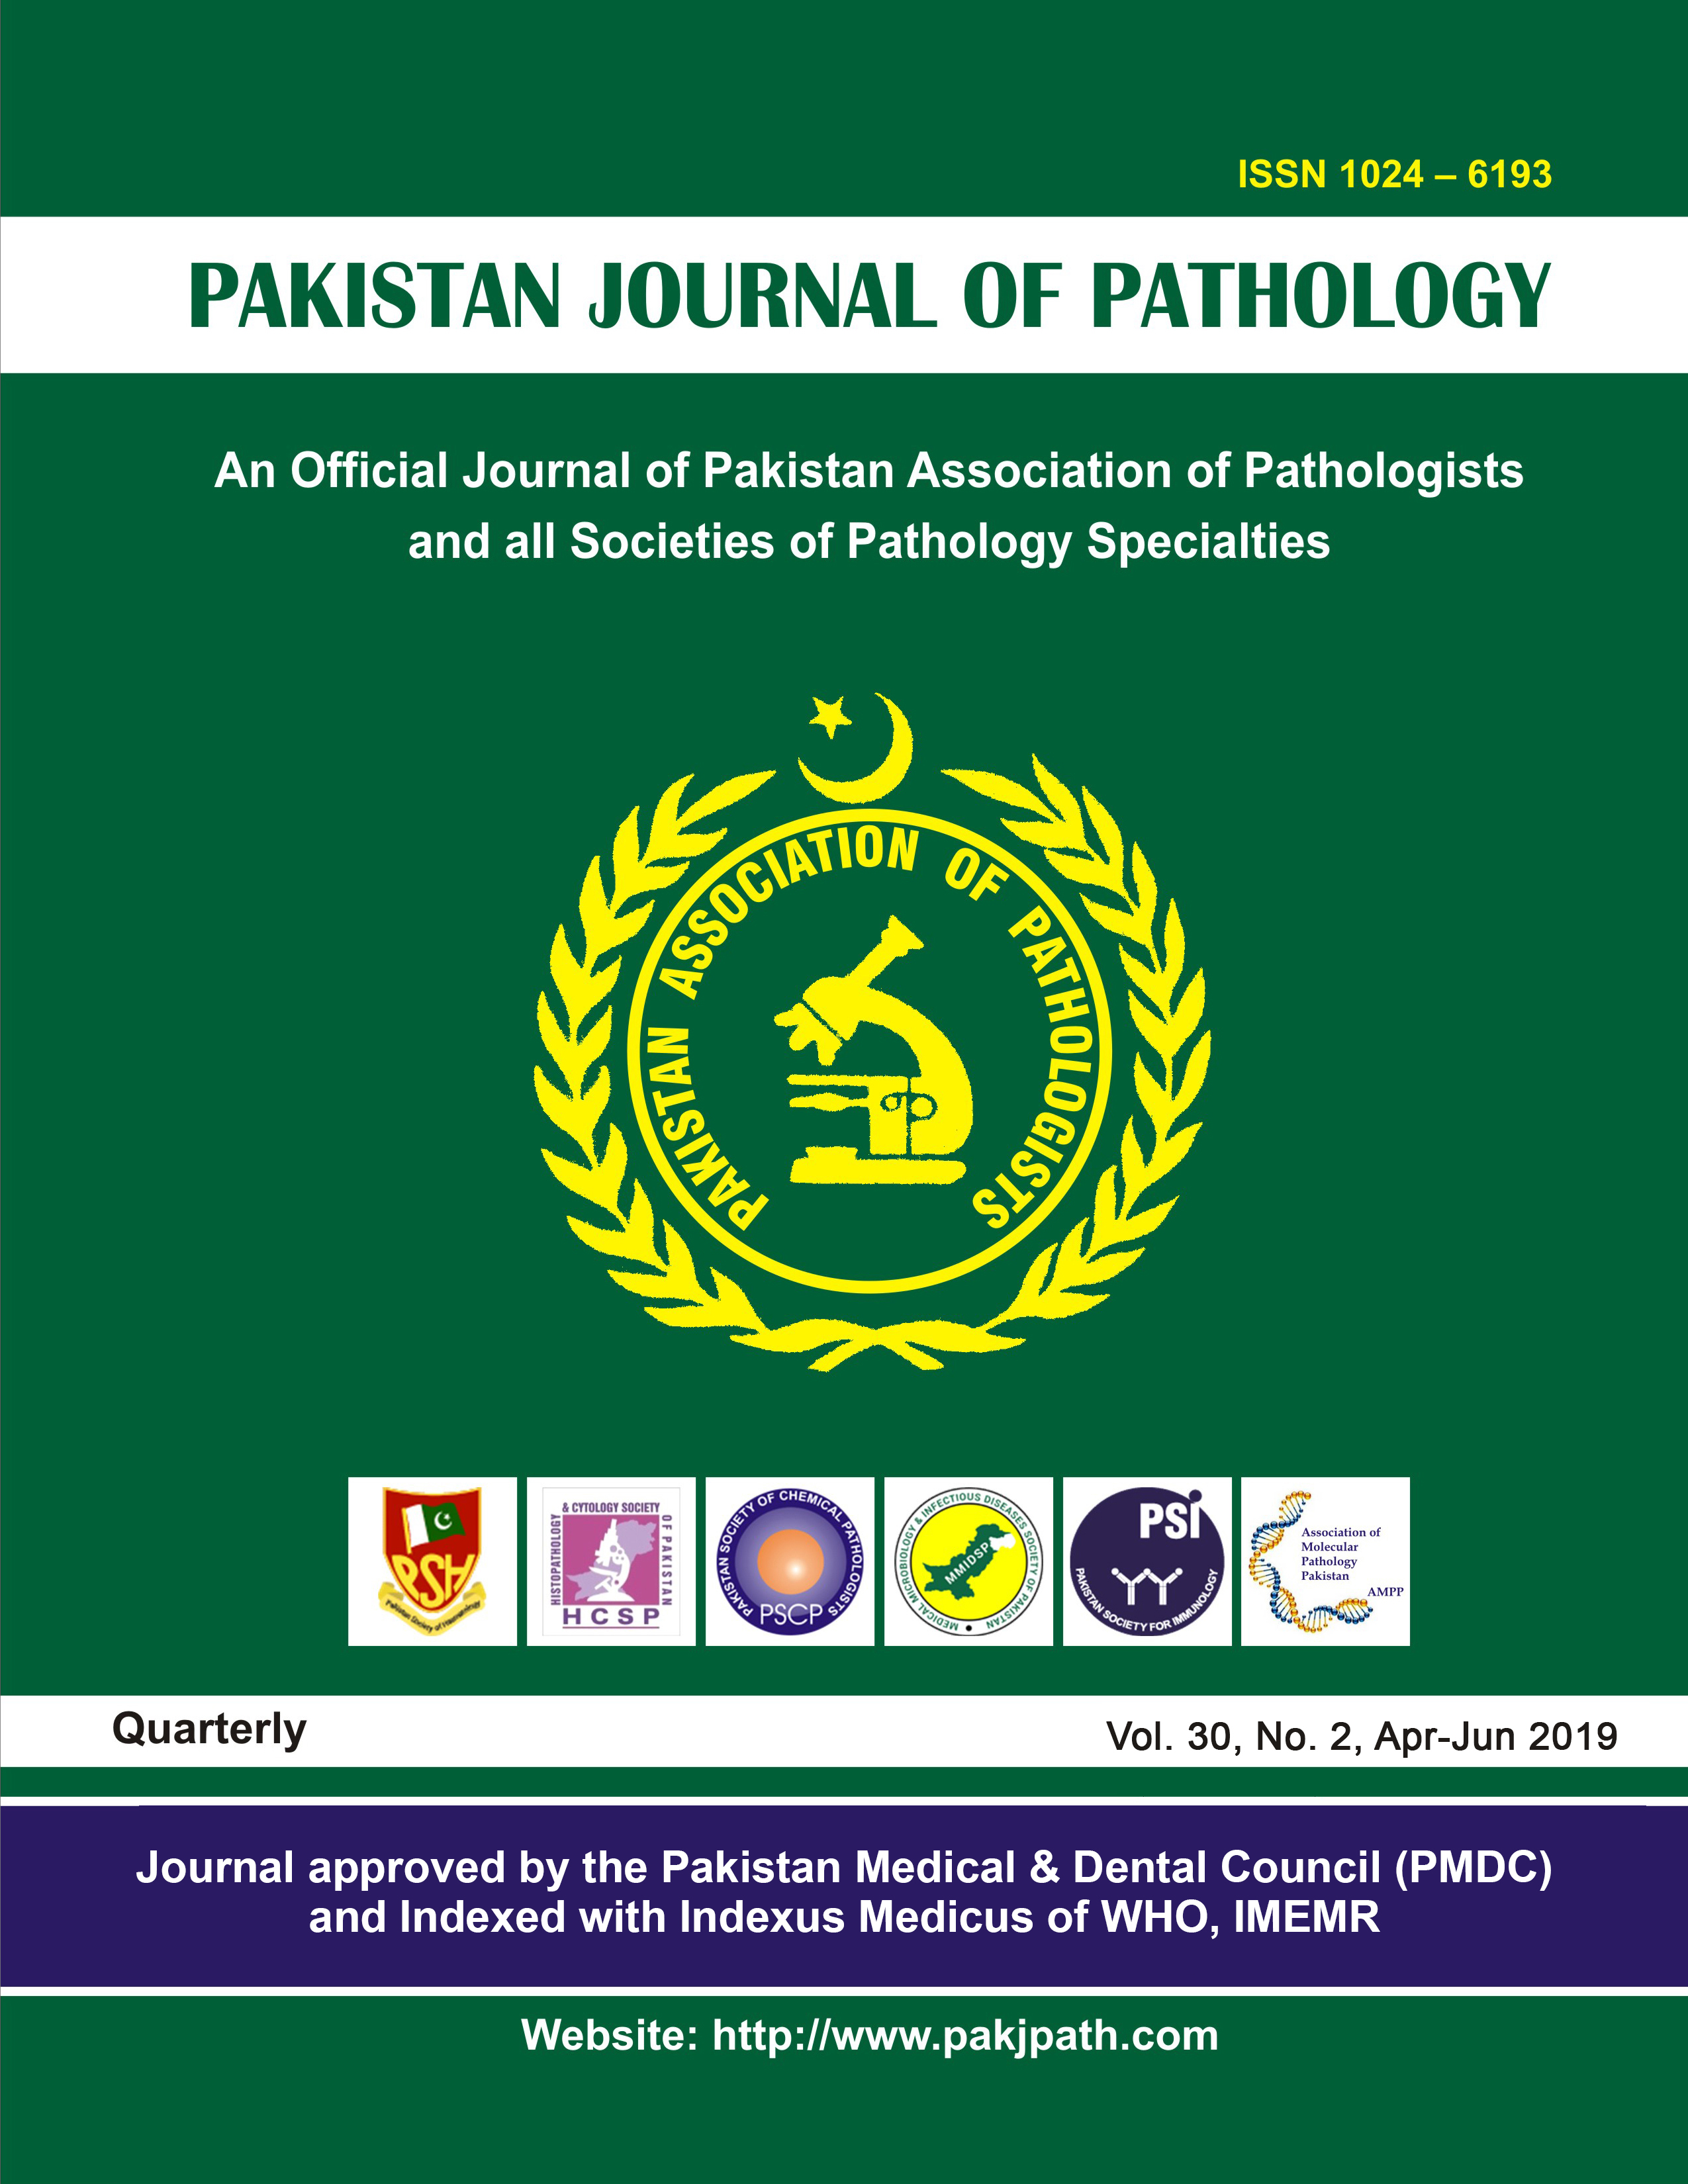 Pakistan Journal of Pathology